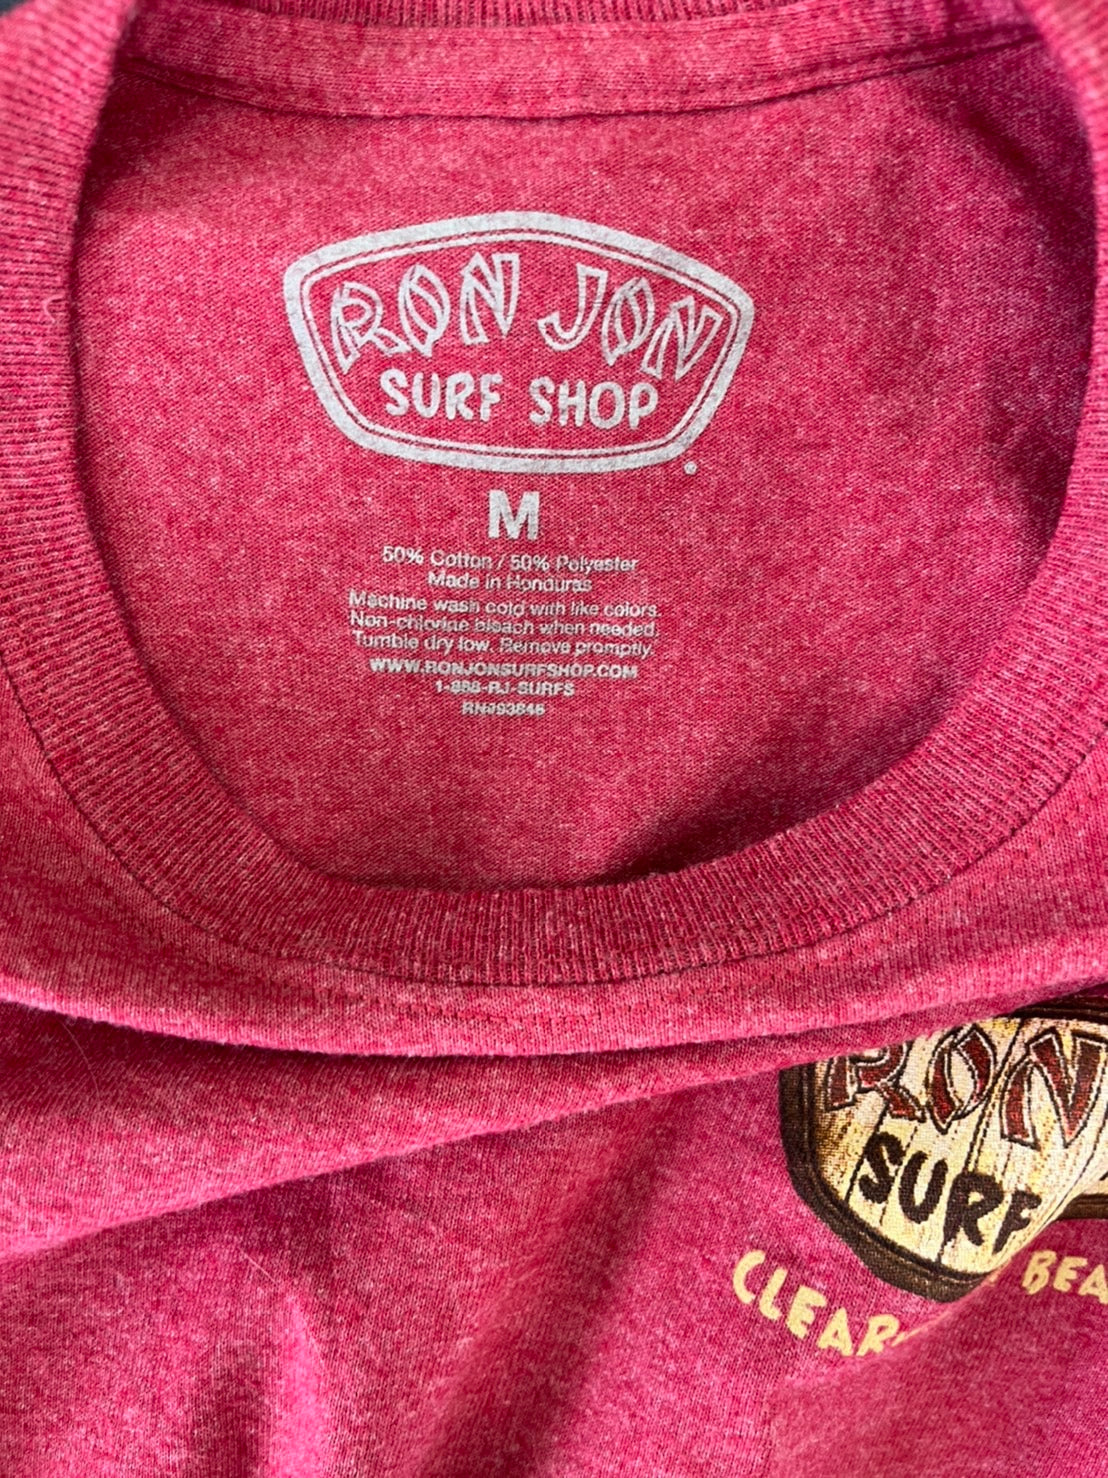 【RON JON】00's RonJon Surf Shop CLEAR WATER BEACH Y2K T-Shirt  （men's M)